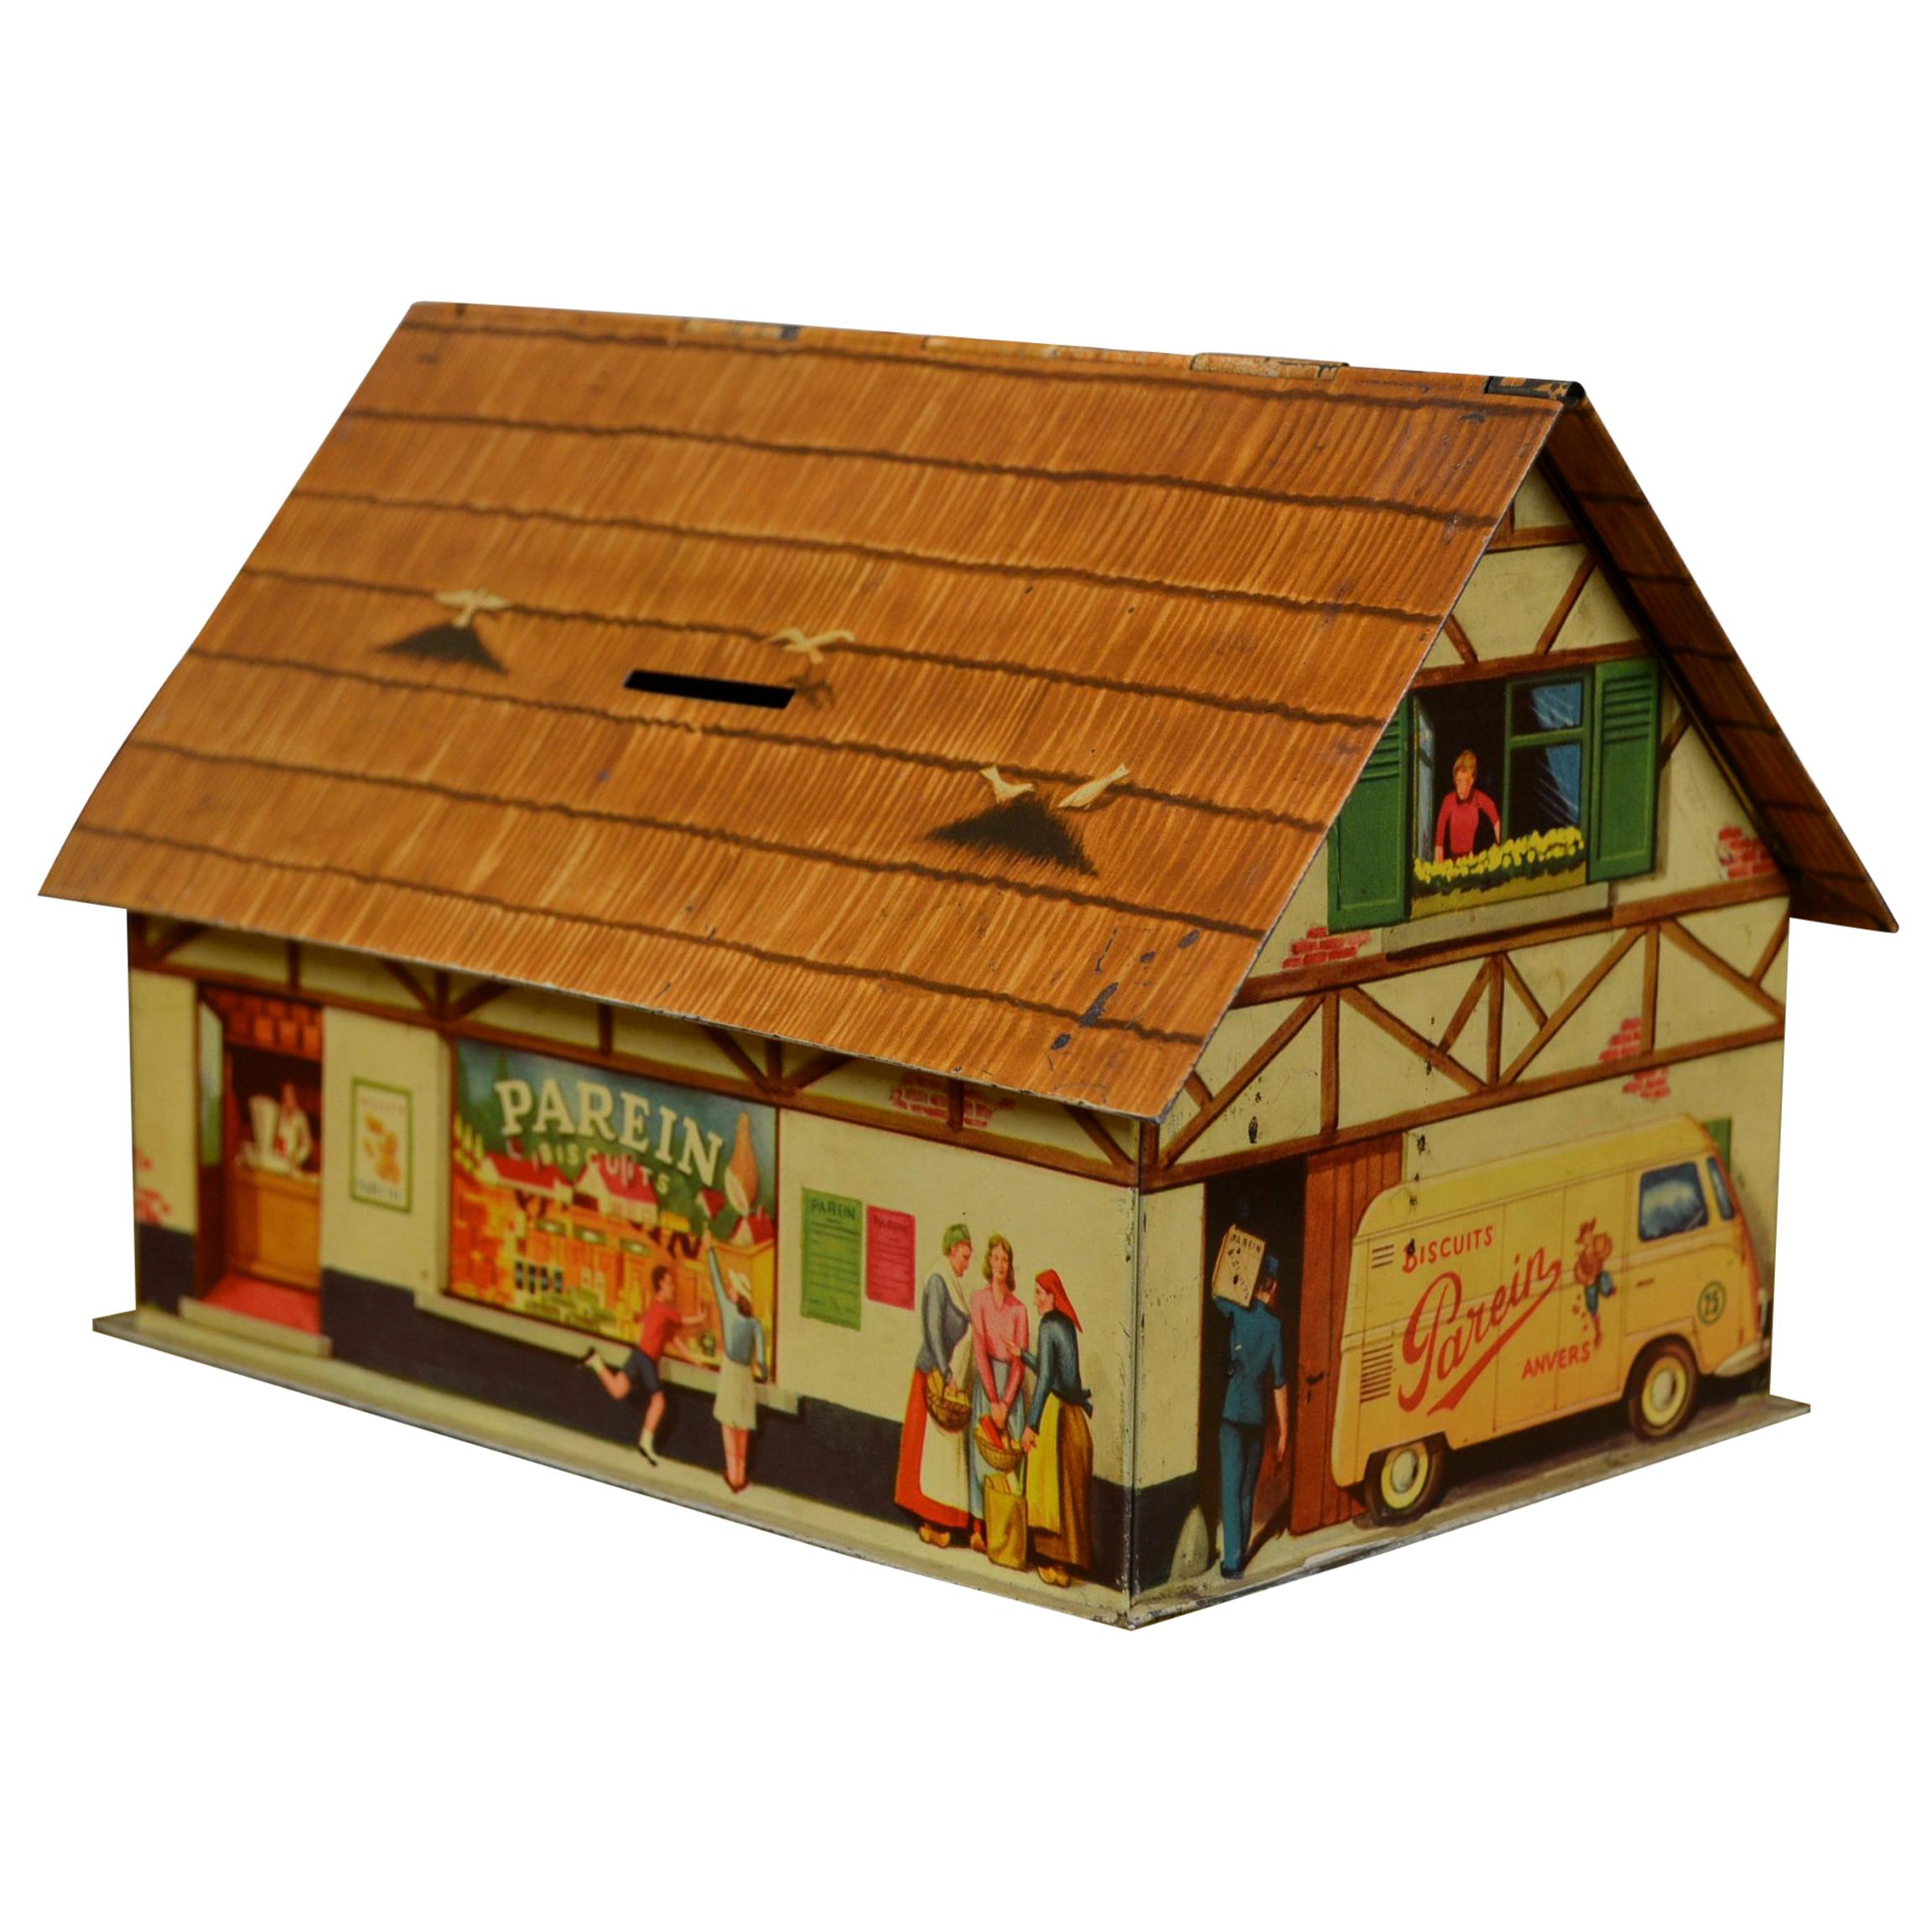 1940s Farmhouse Biscuit Tin, Moneybox for Parein Biscuits, Belgium